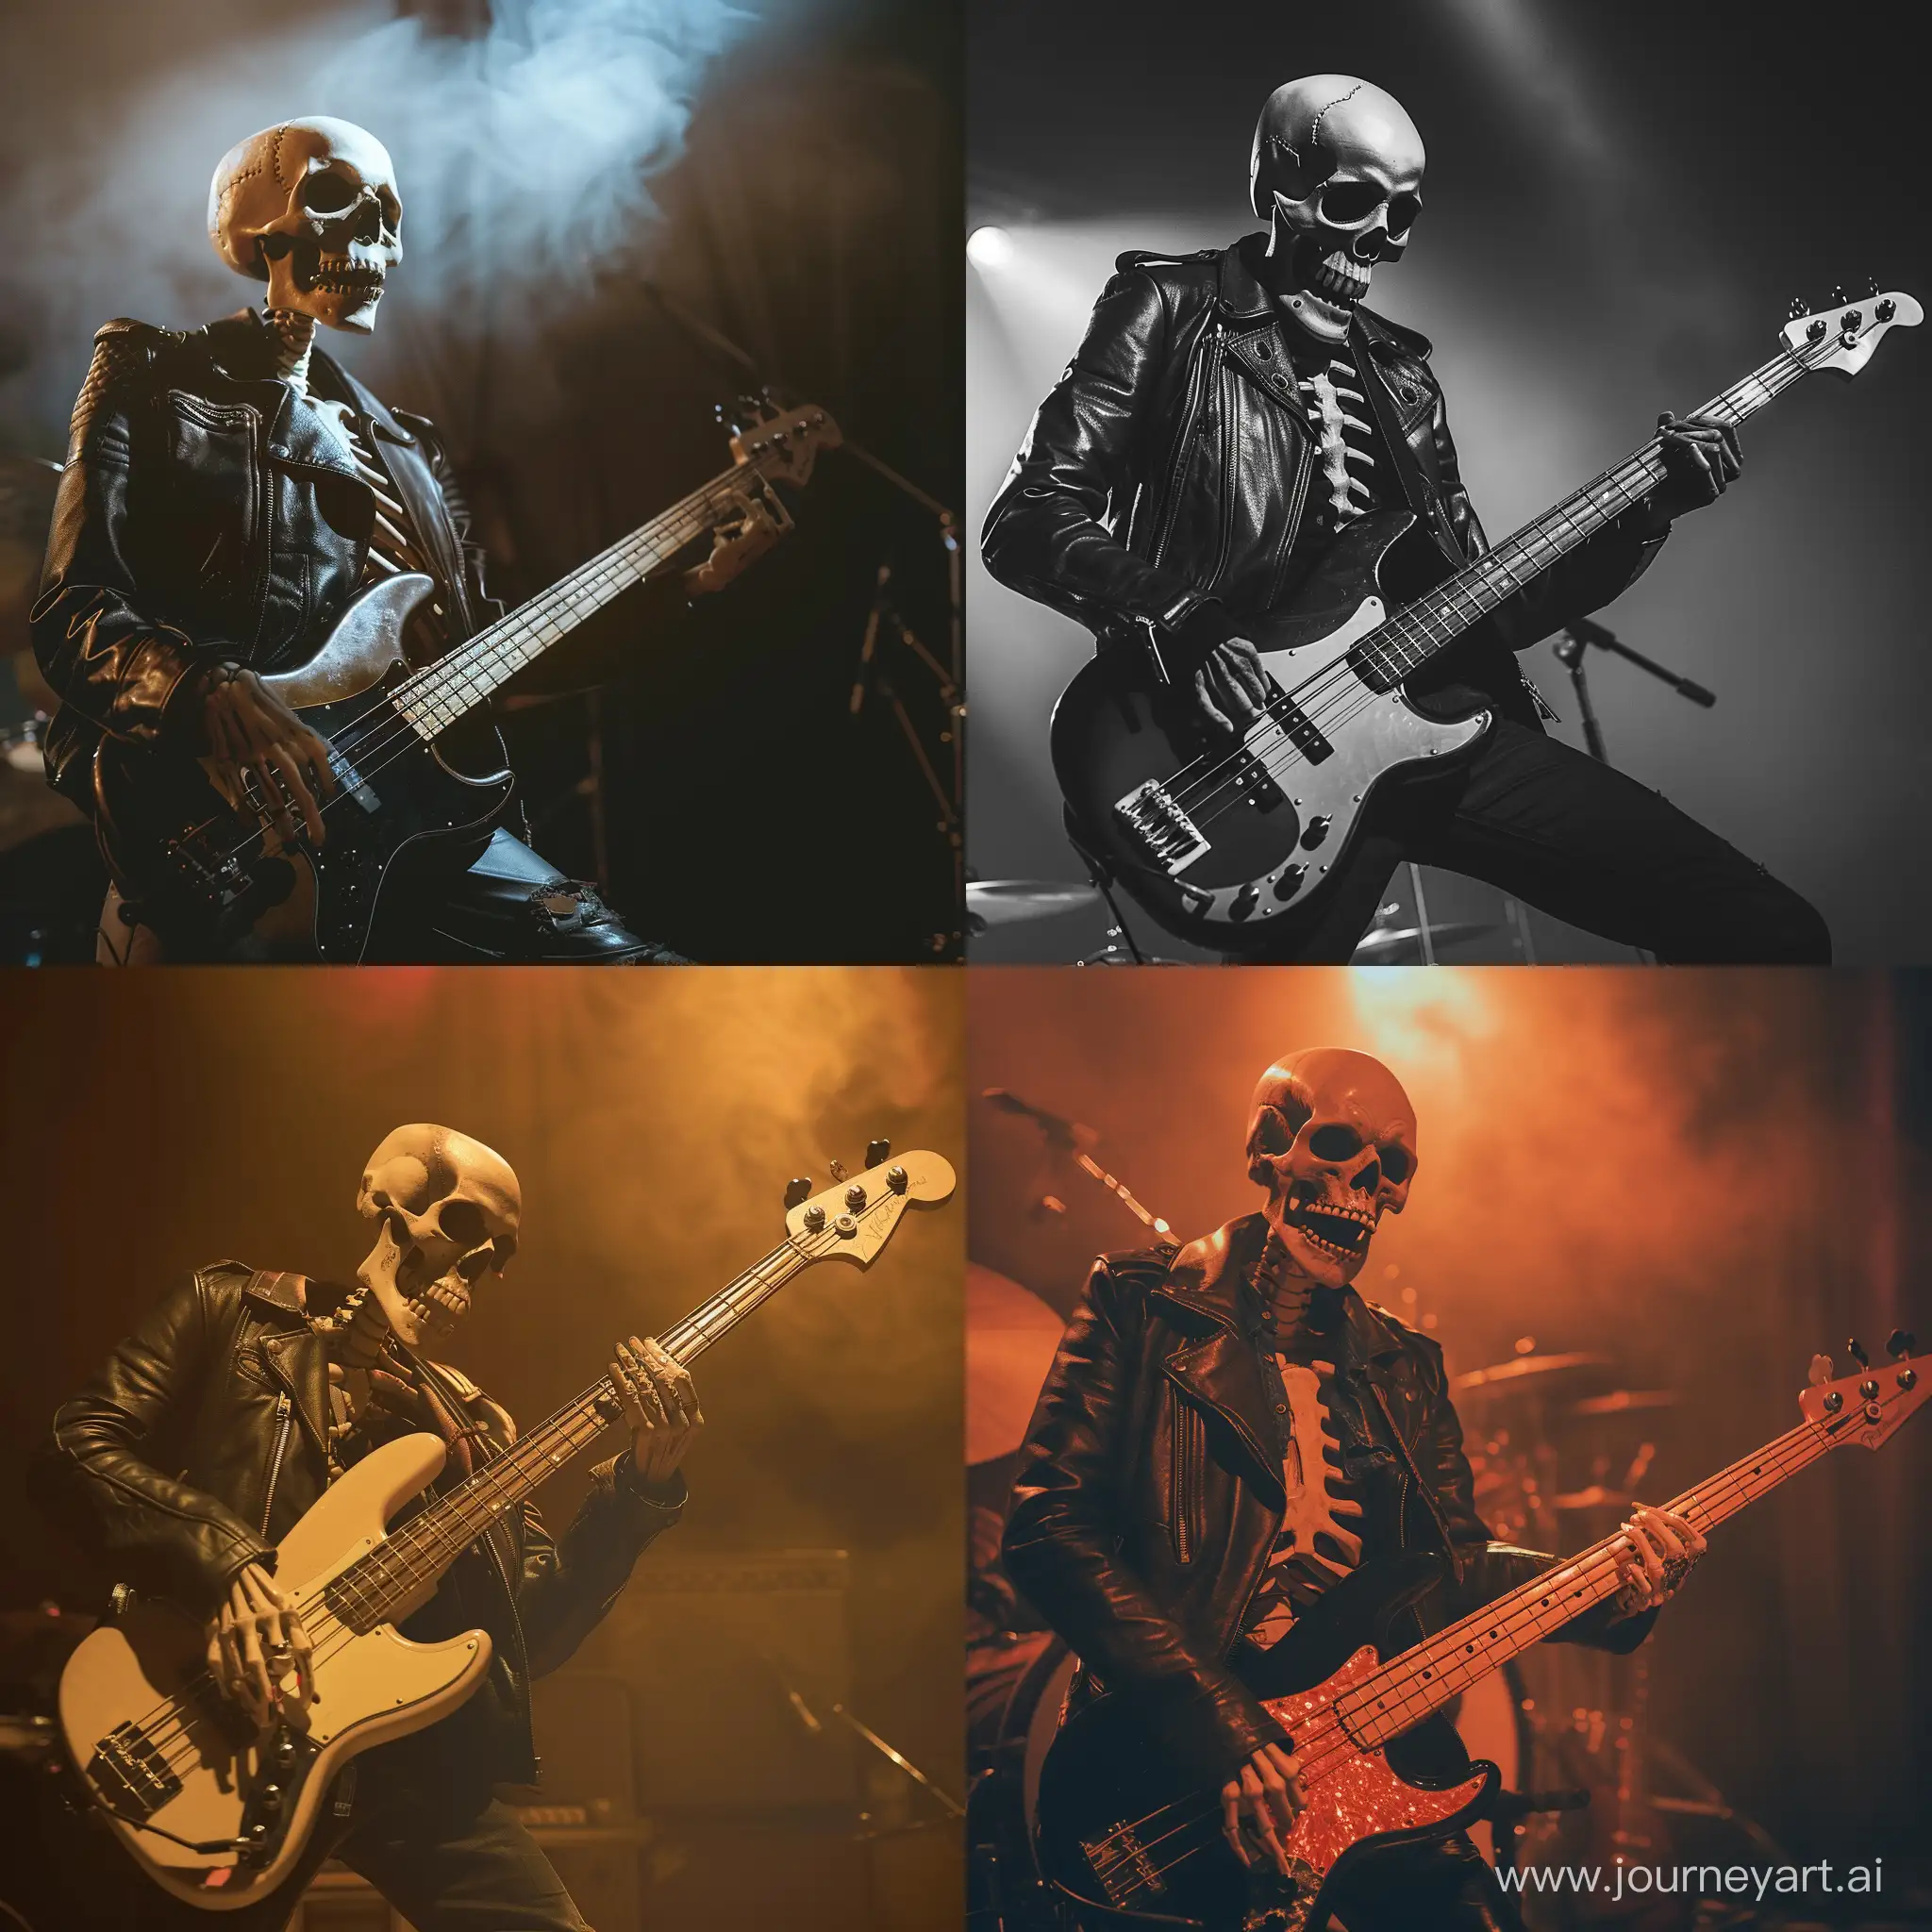 Skeleton, dressed in leather jacket, play on bass guitar, rock fest, dimmed light